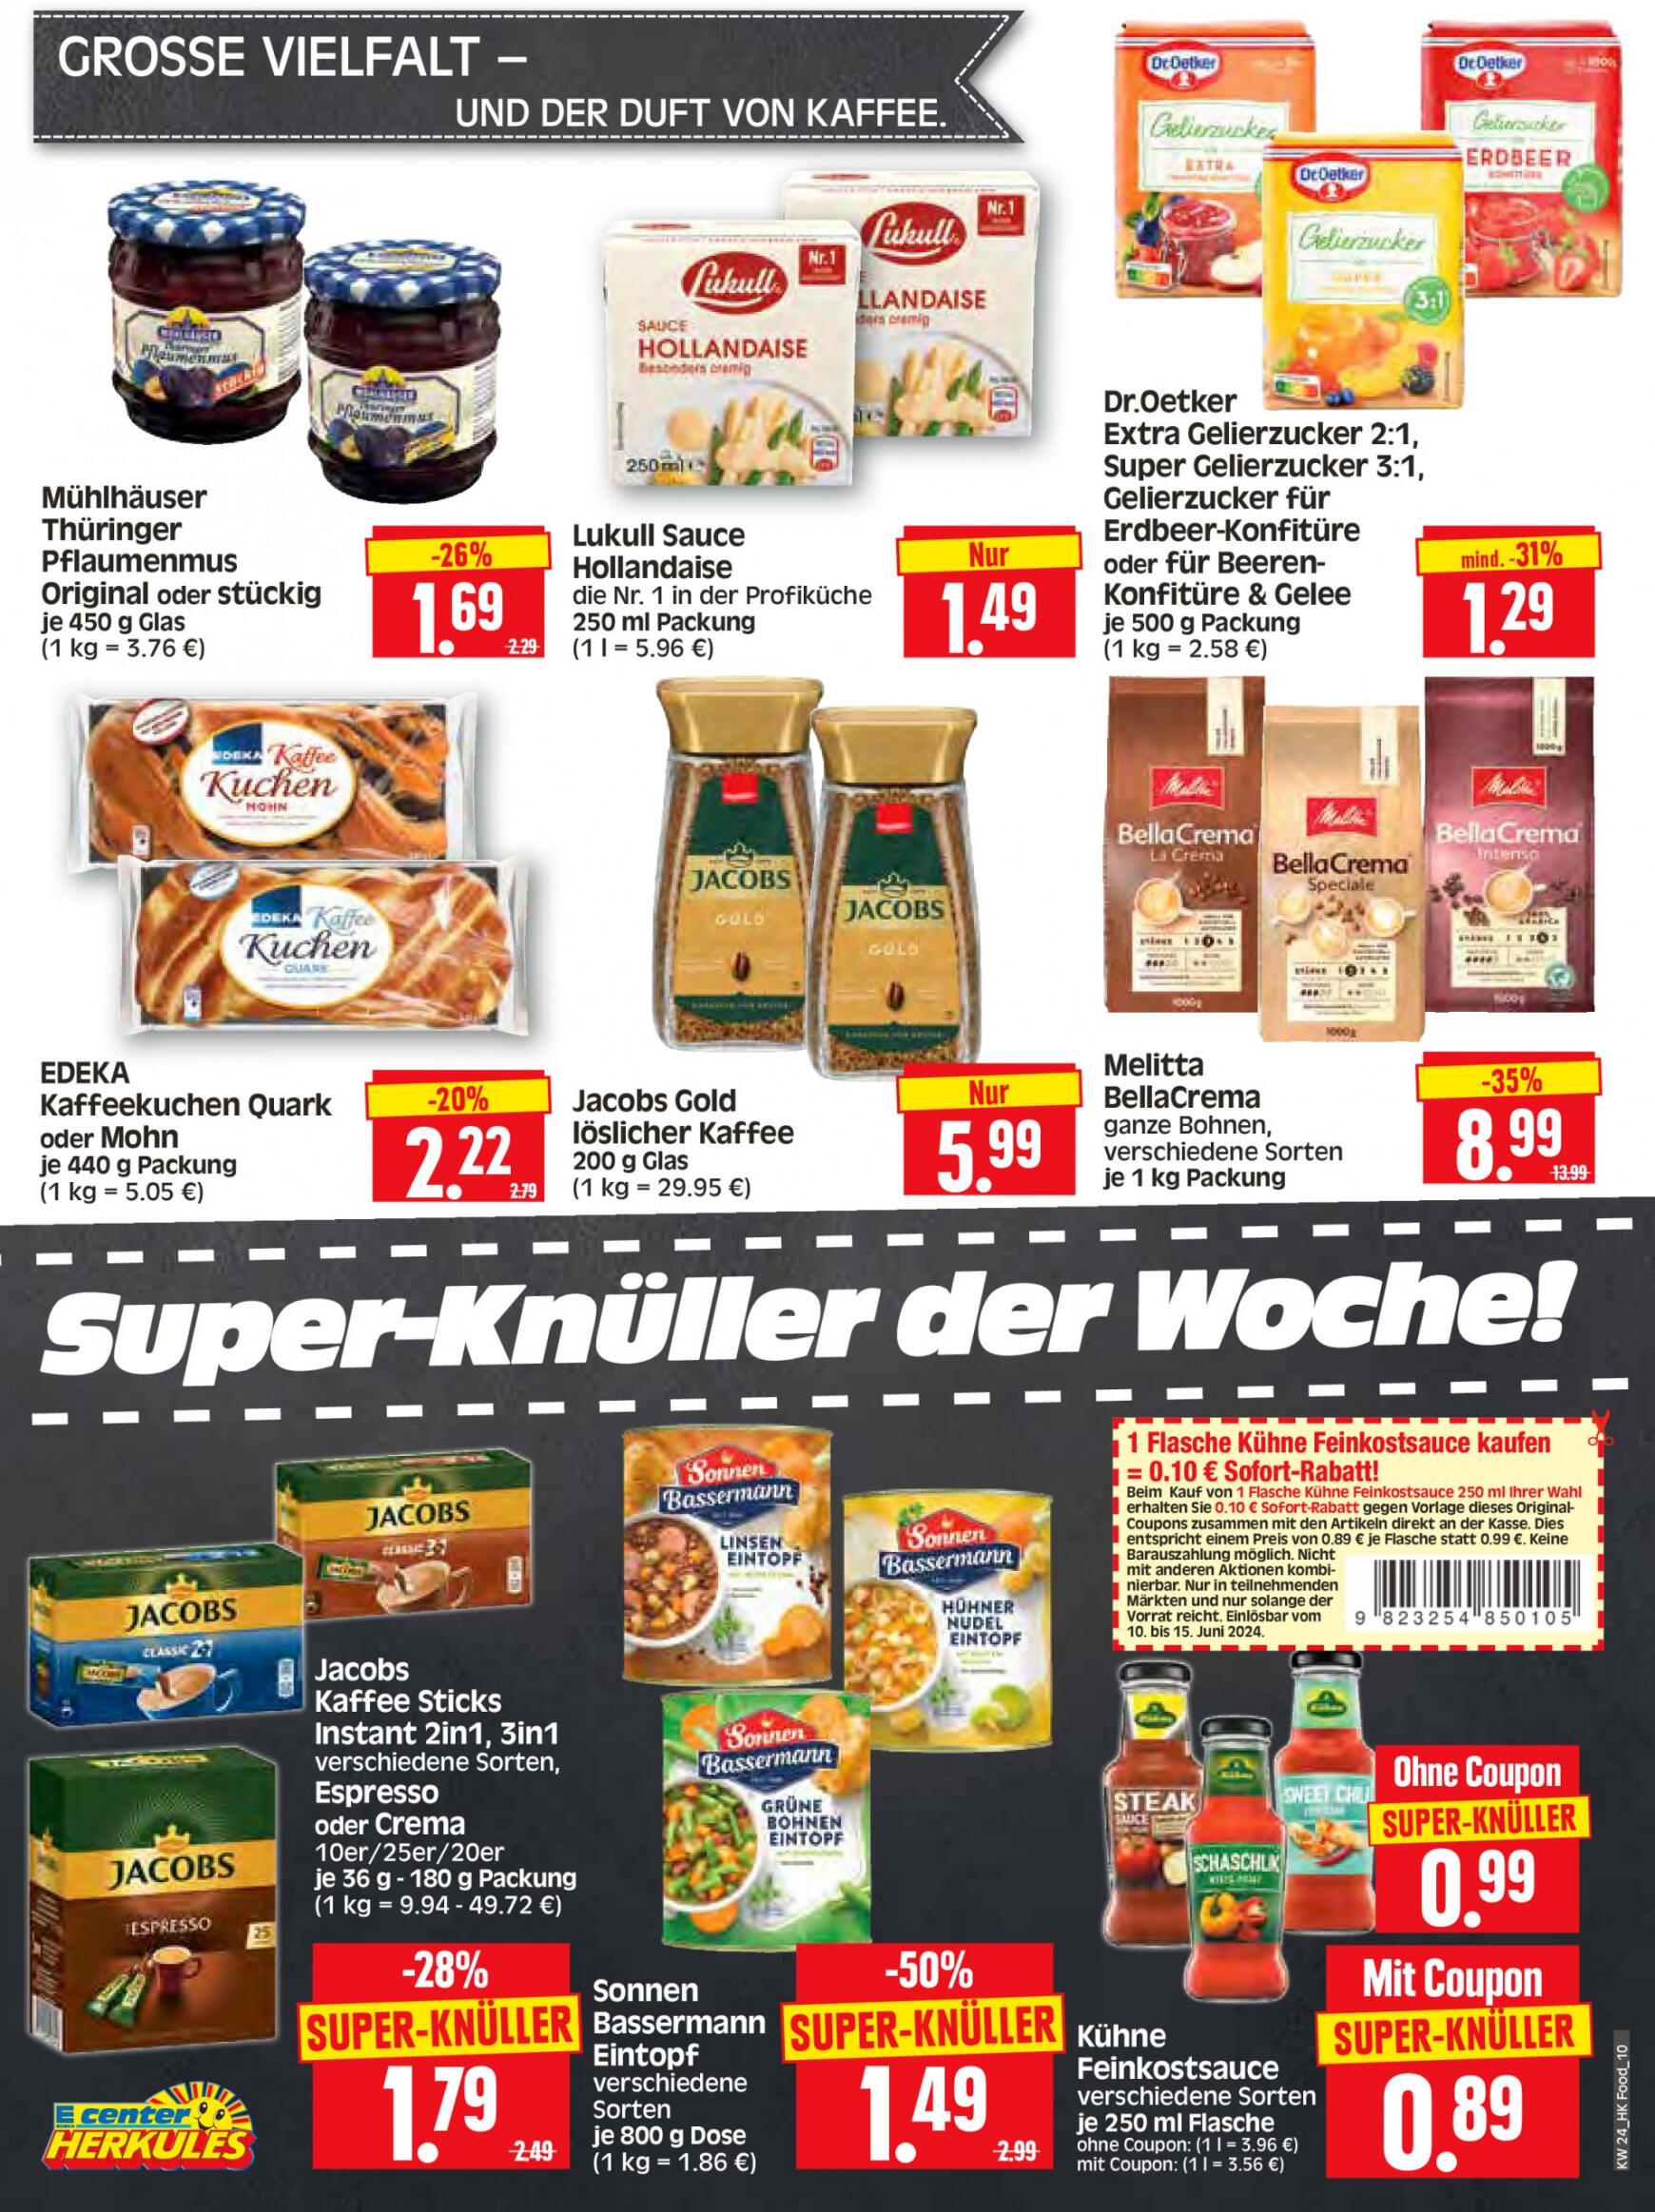 herkules - Flyer Herkules - Lebensmittel aktuell 10.06. - 15.06. - page: 10